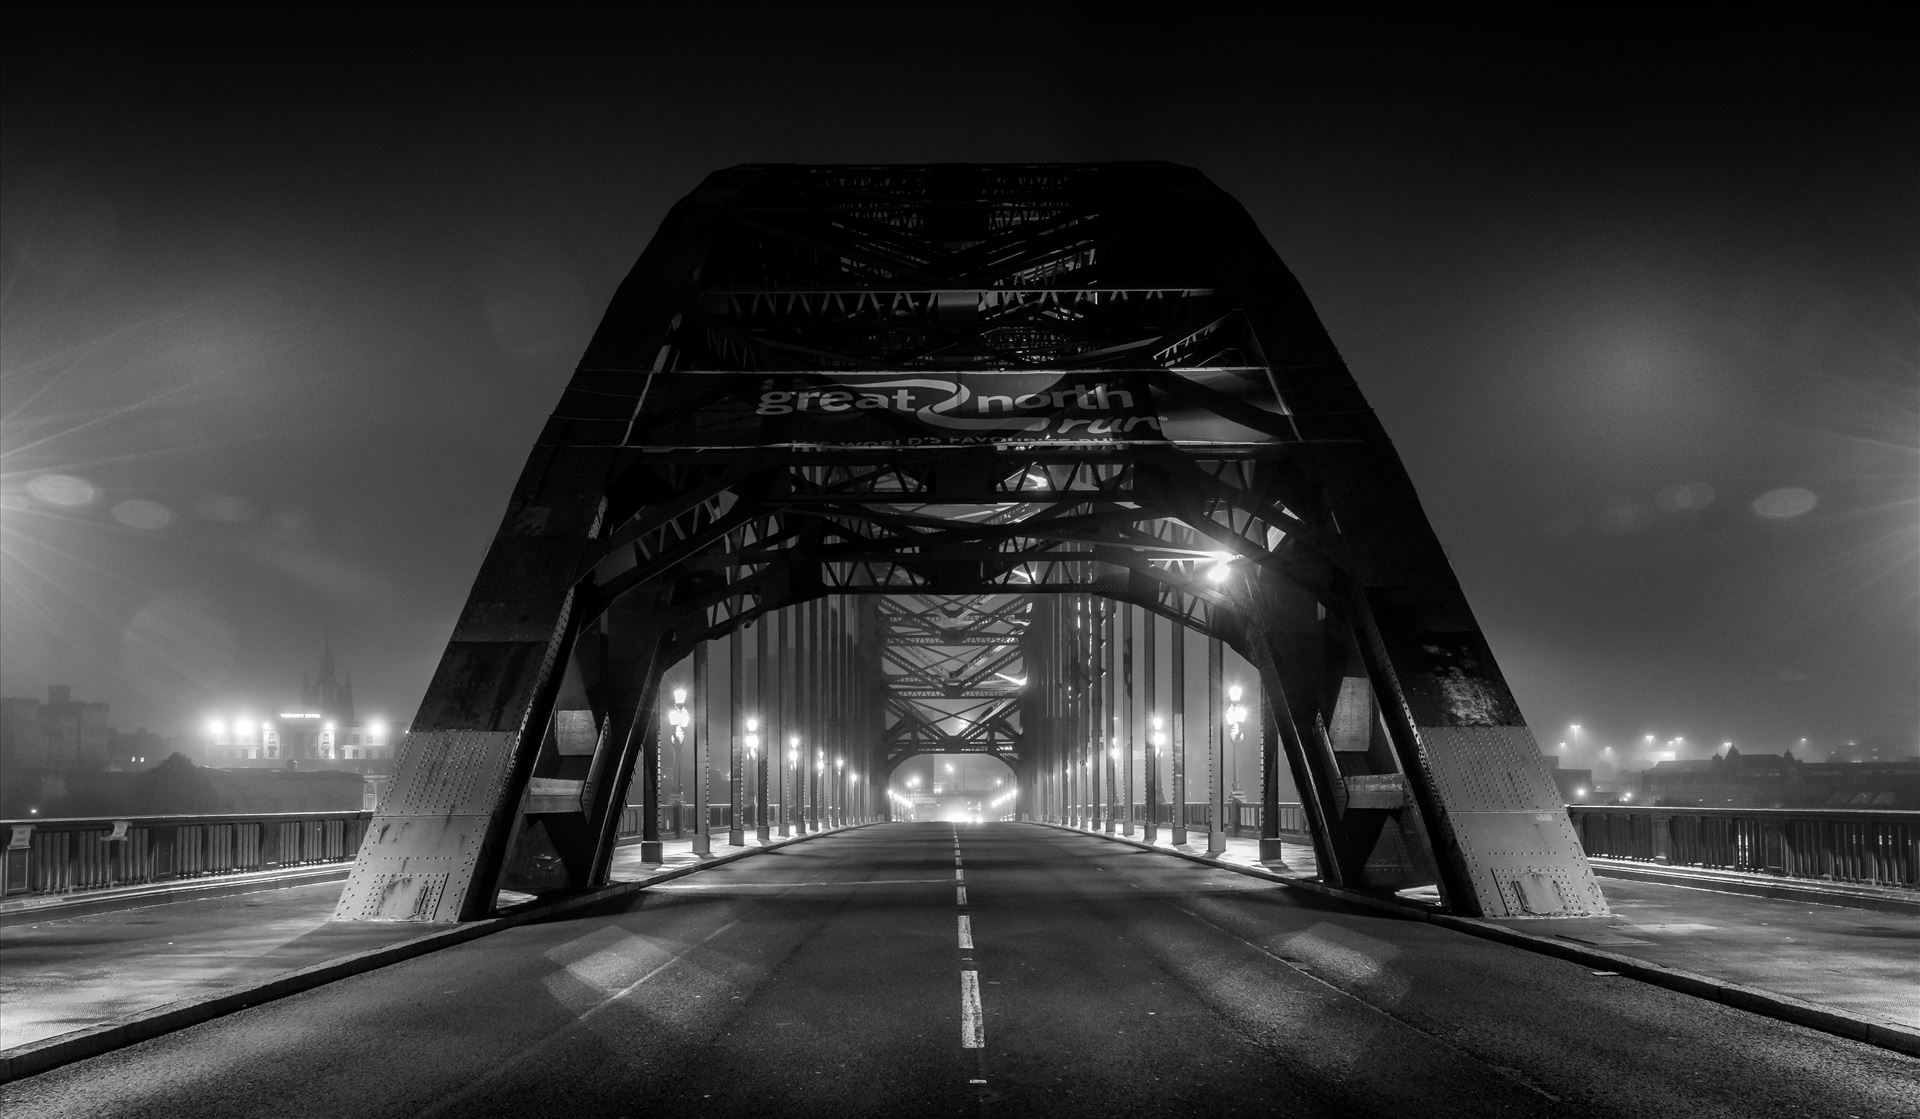 Tyne bridge - The Tyne Bridge at night by philreay